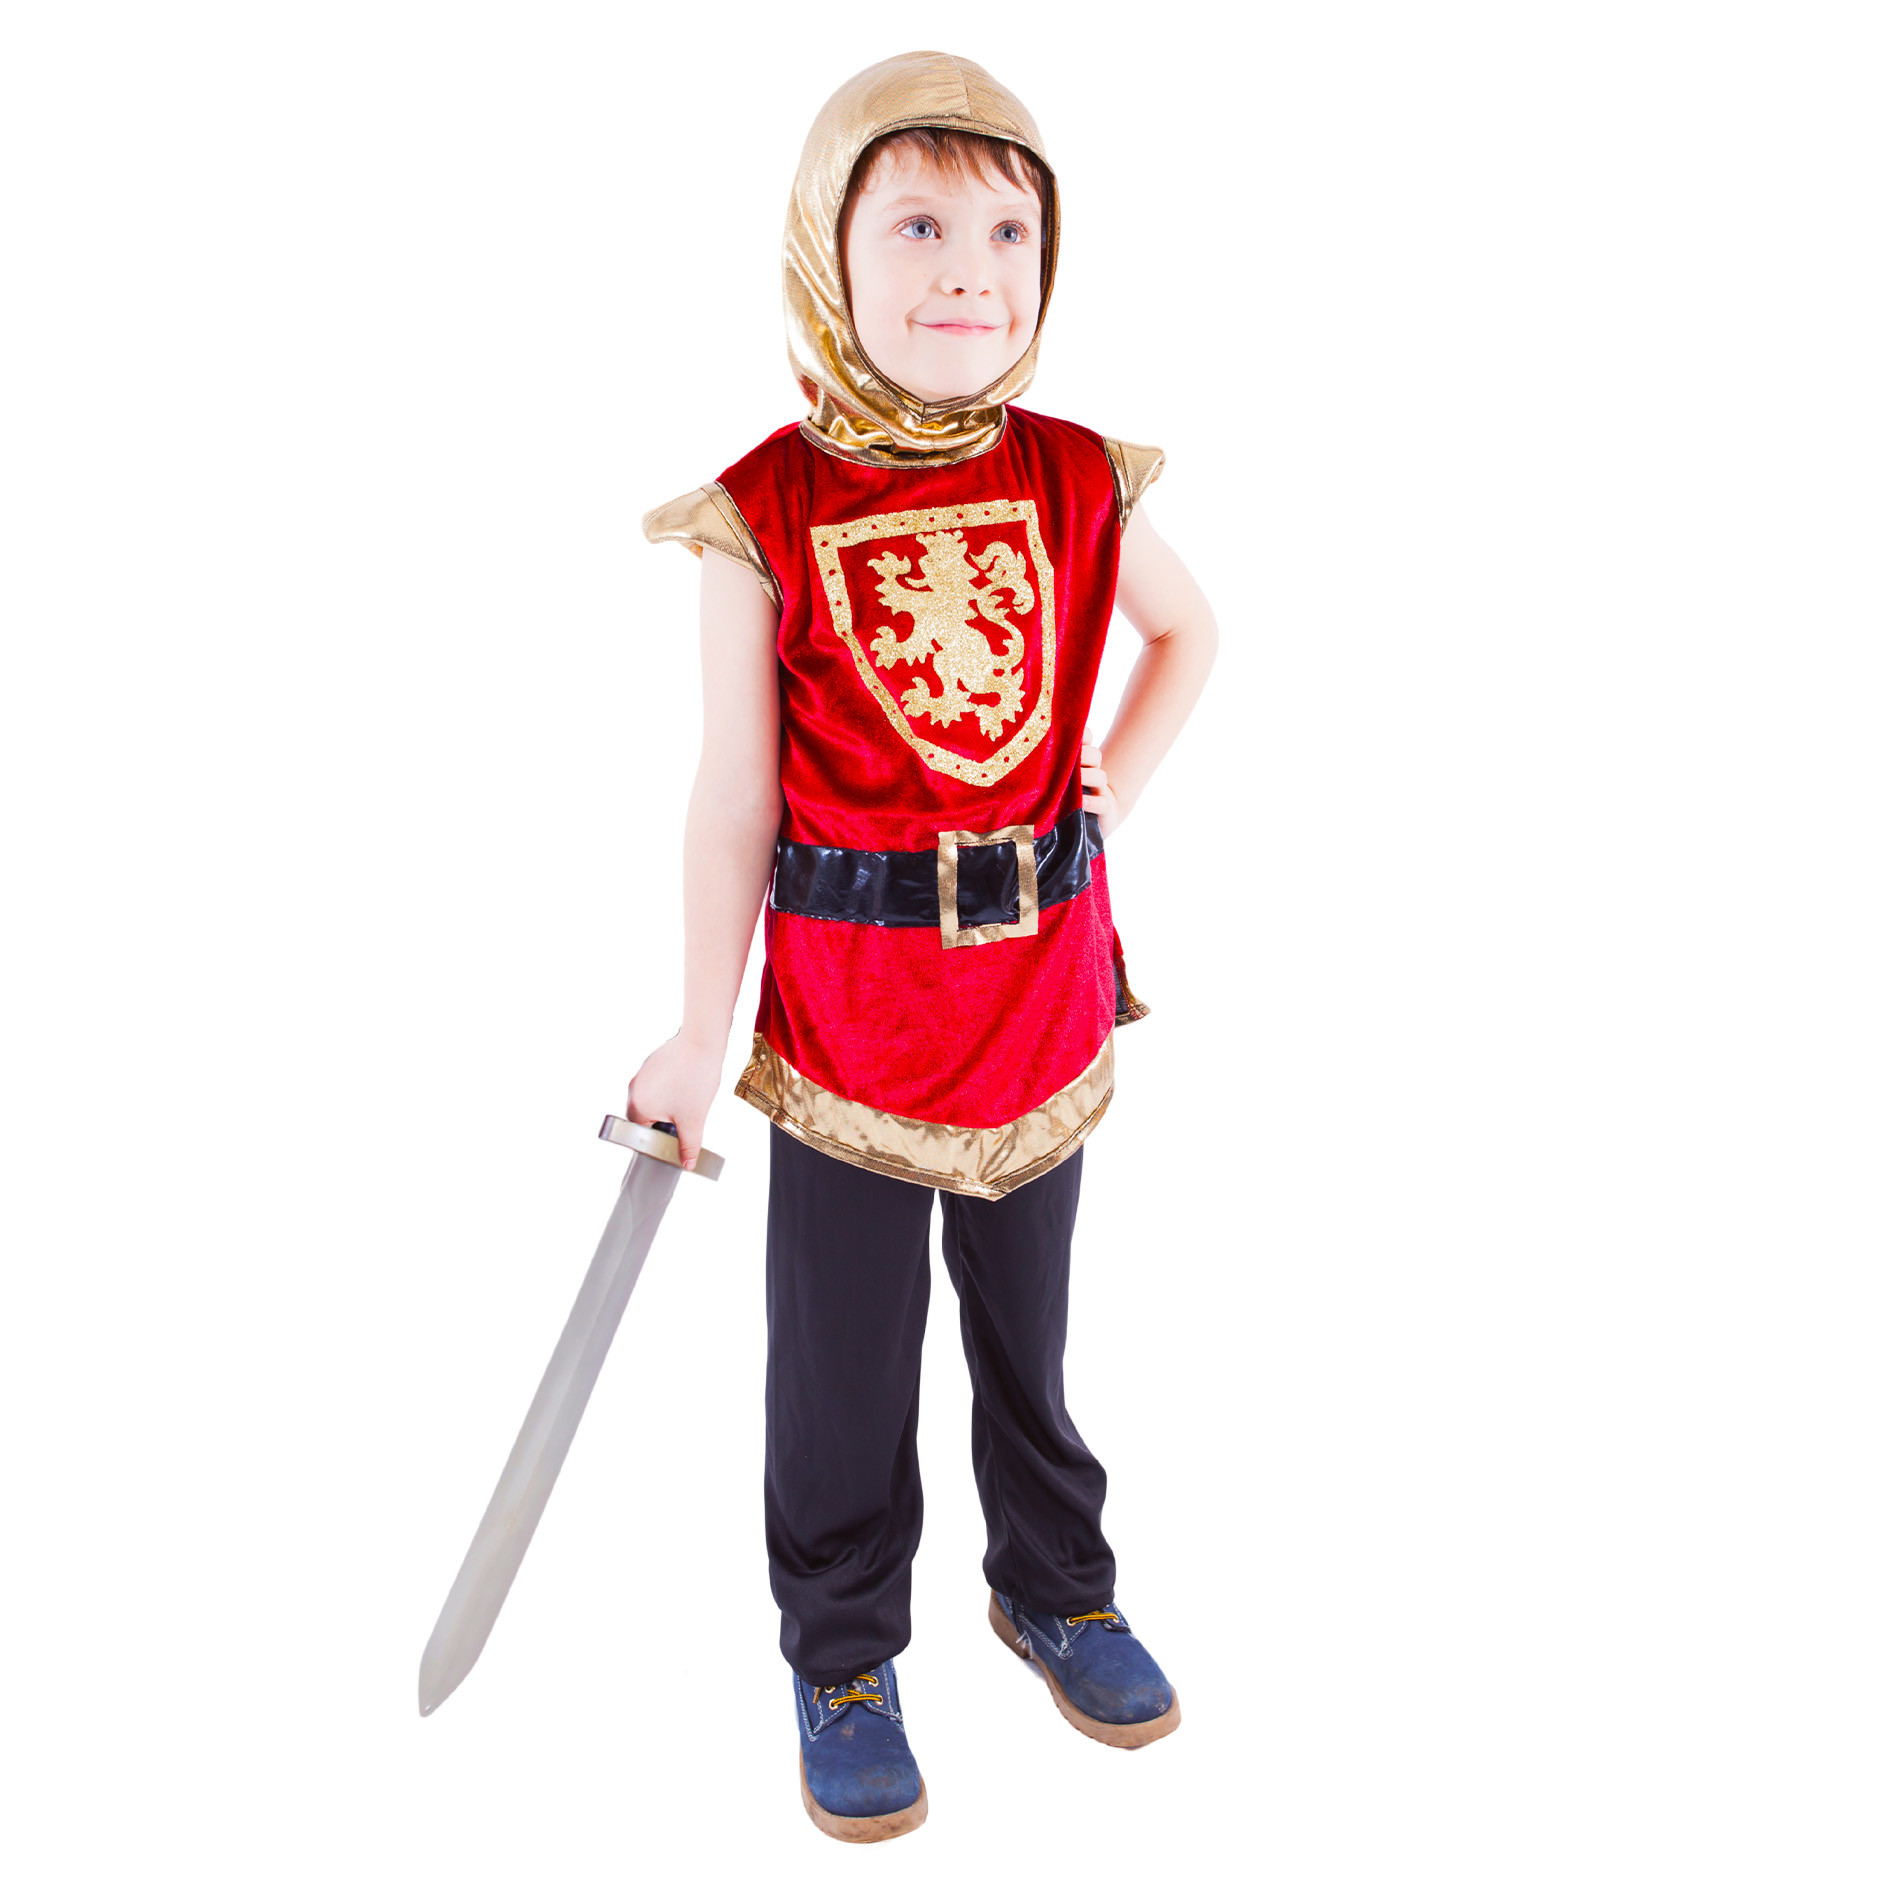 Children costume - red knight (M)